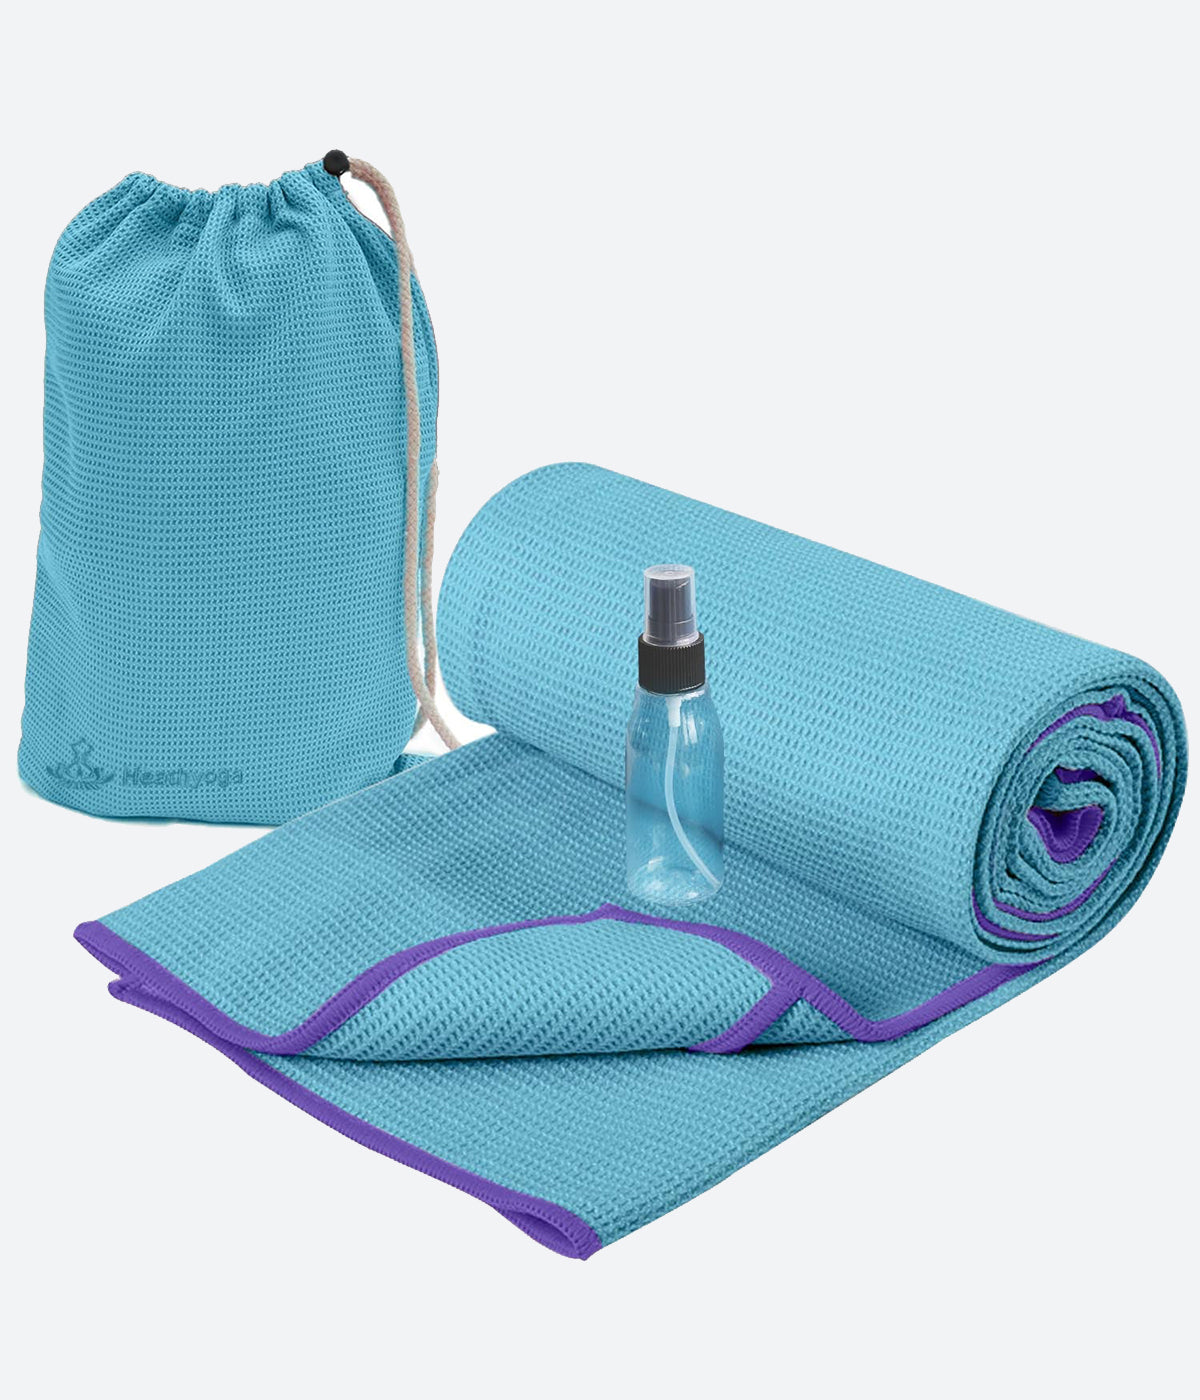  Hot Yoga Towel Non Slip, Microfiber Non Slip Yoga